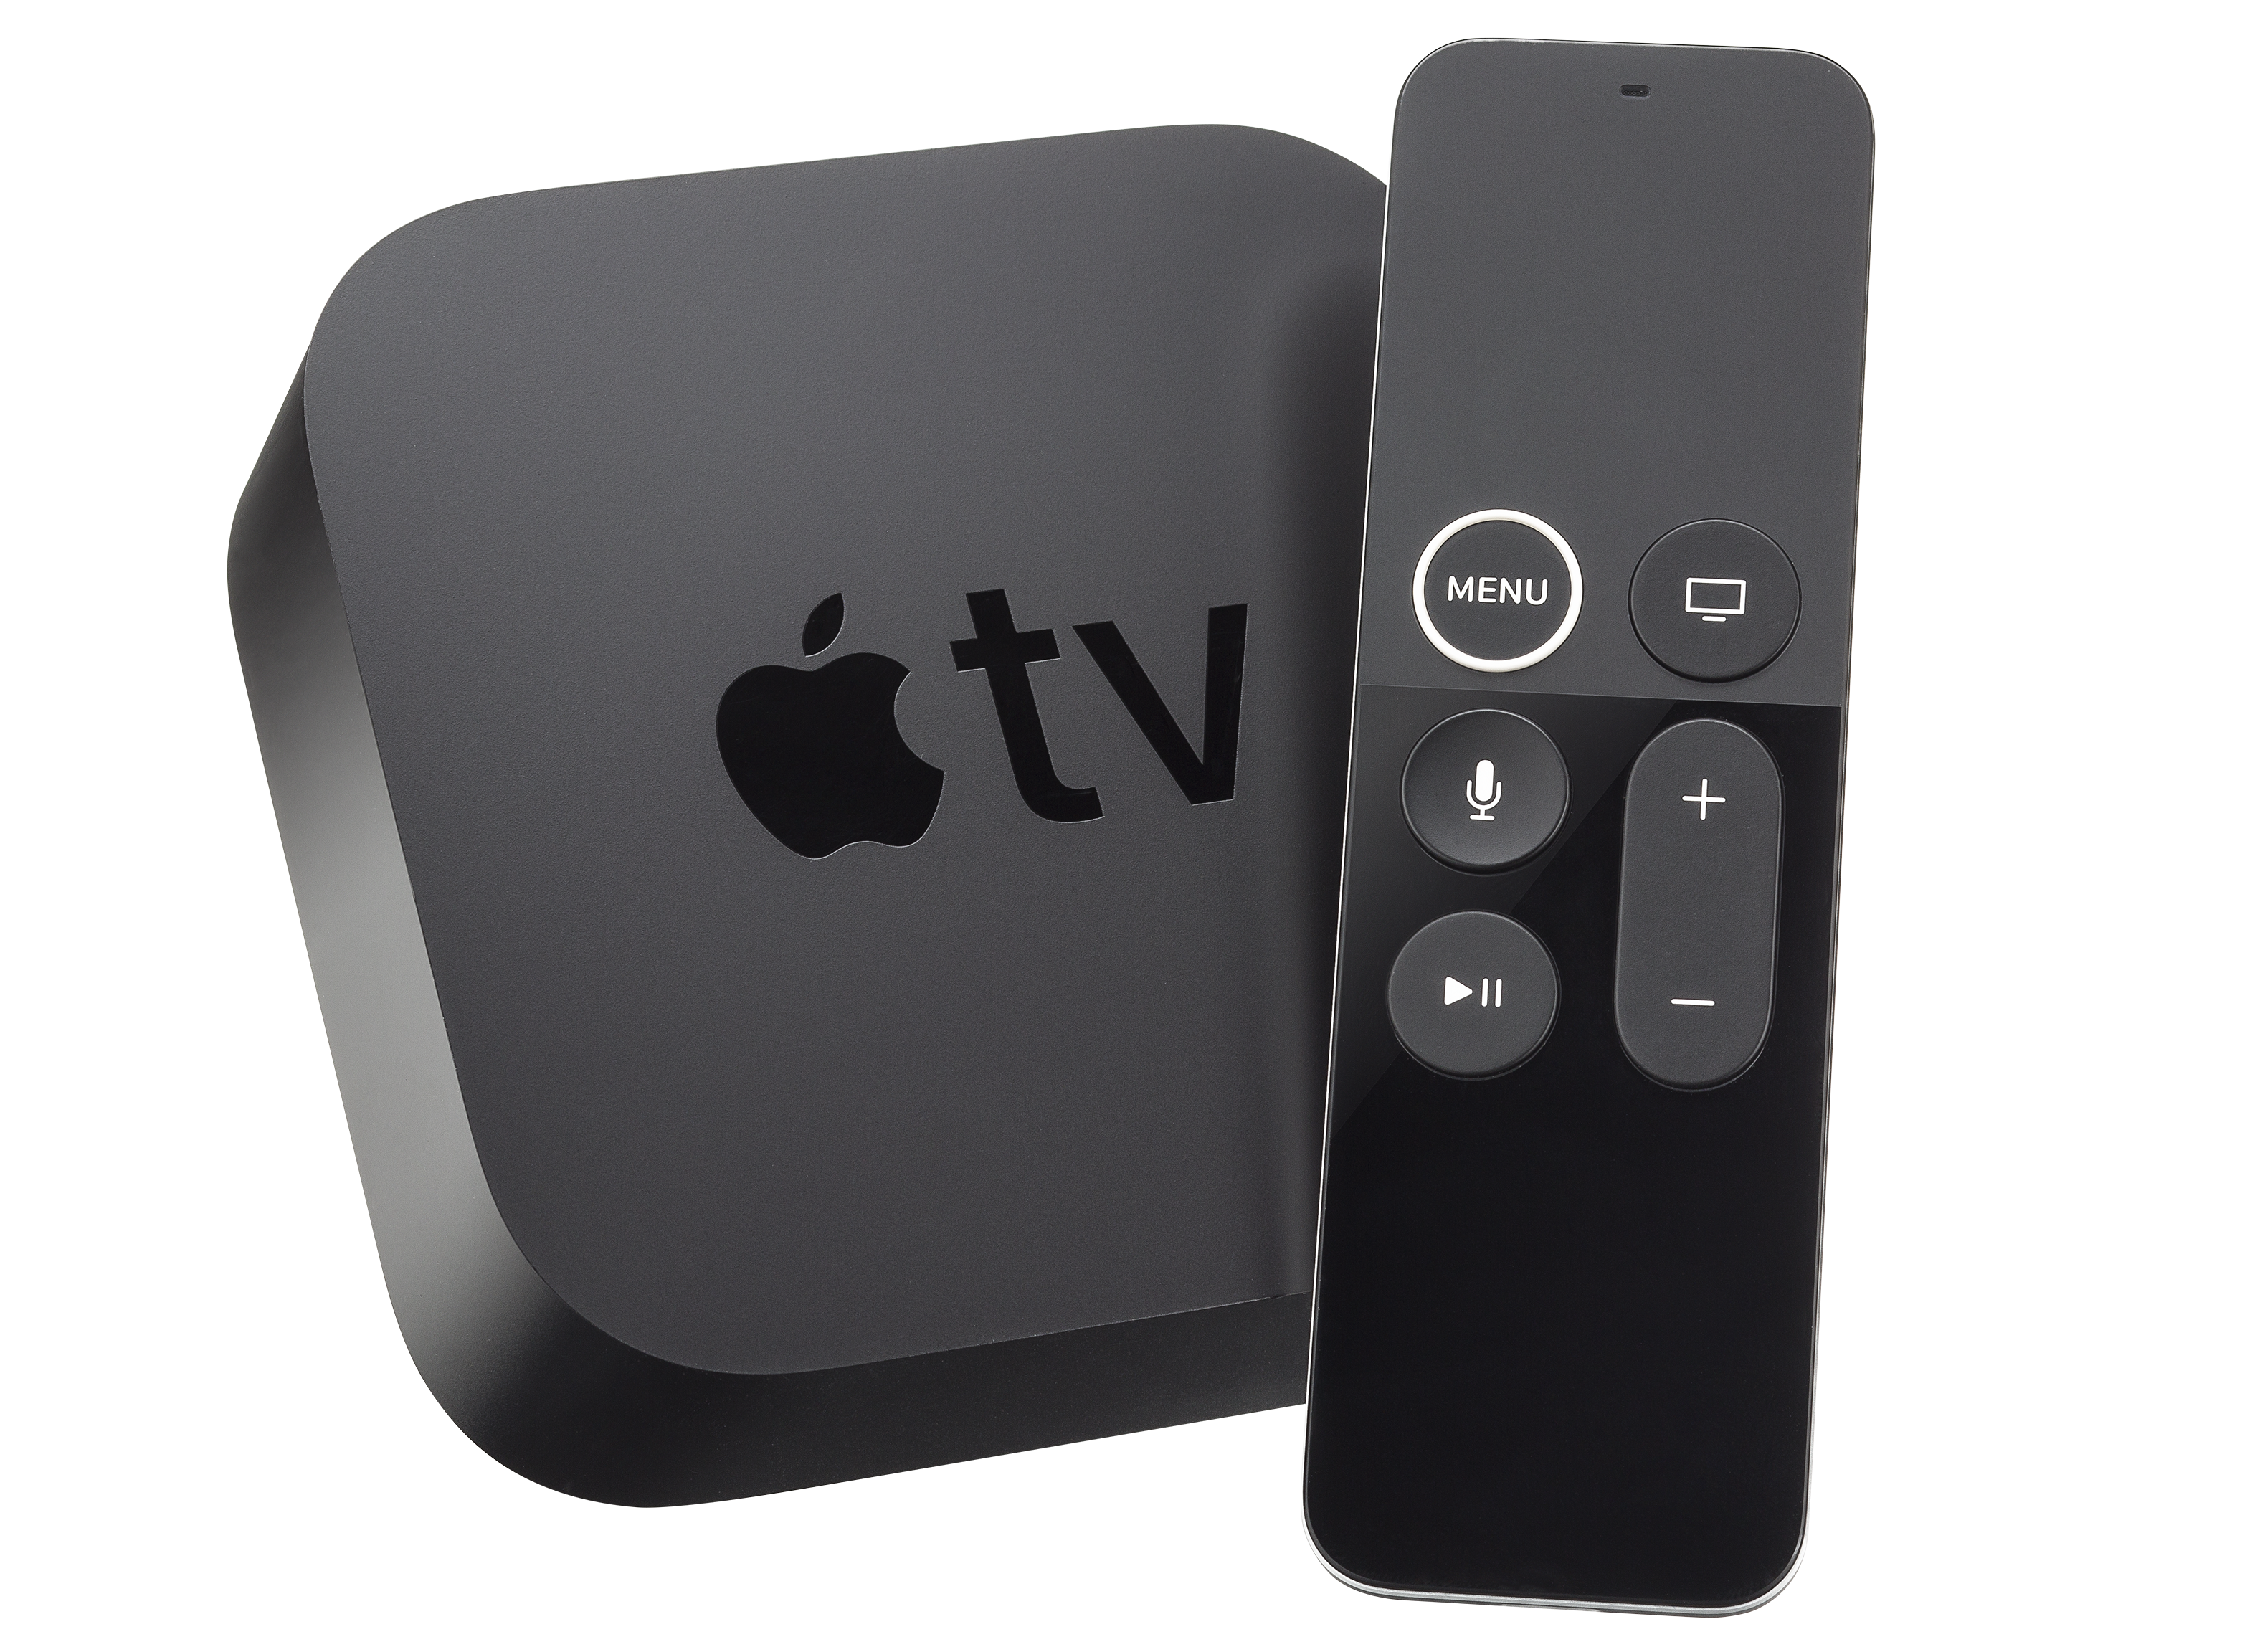 Apple TV 4K (32GB) Streaming Media - Consumer Reports